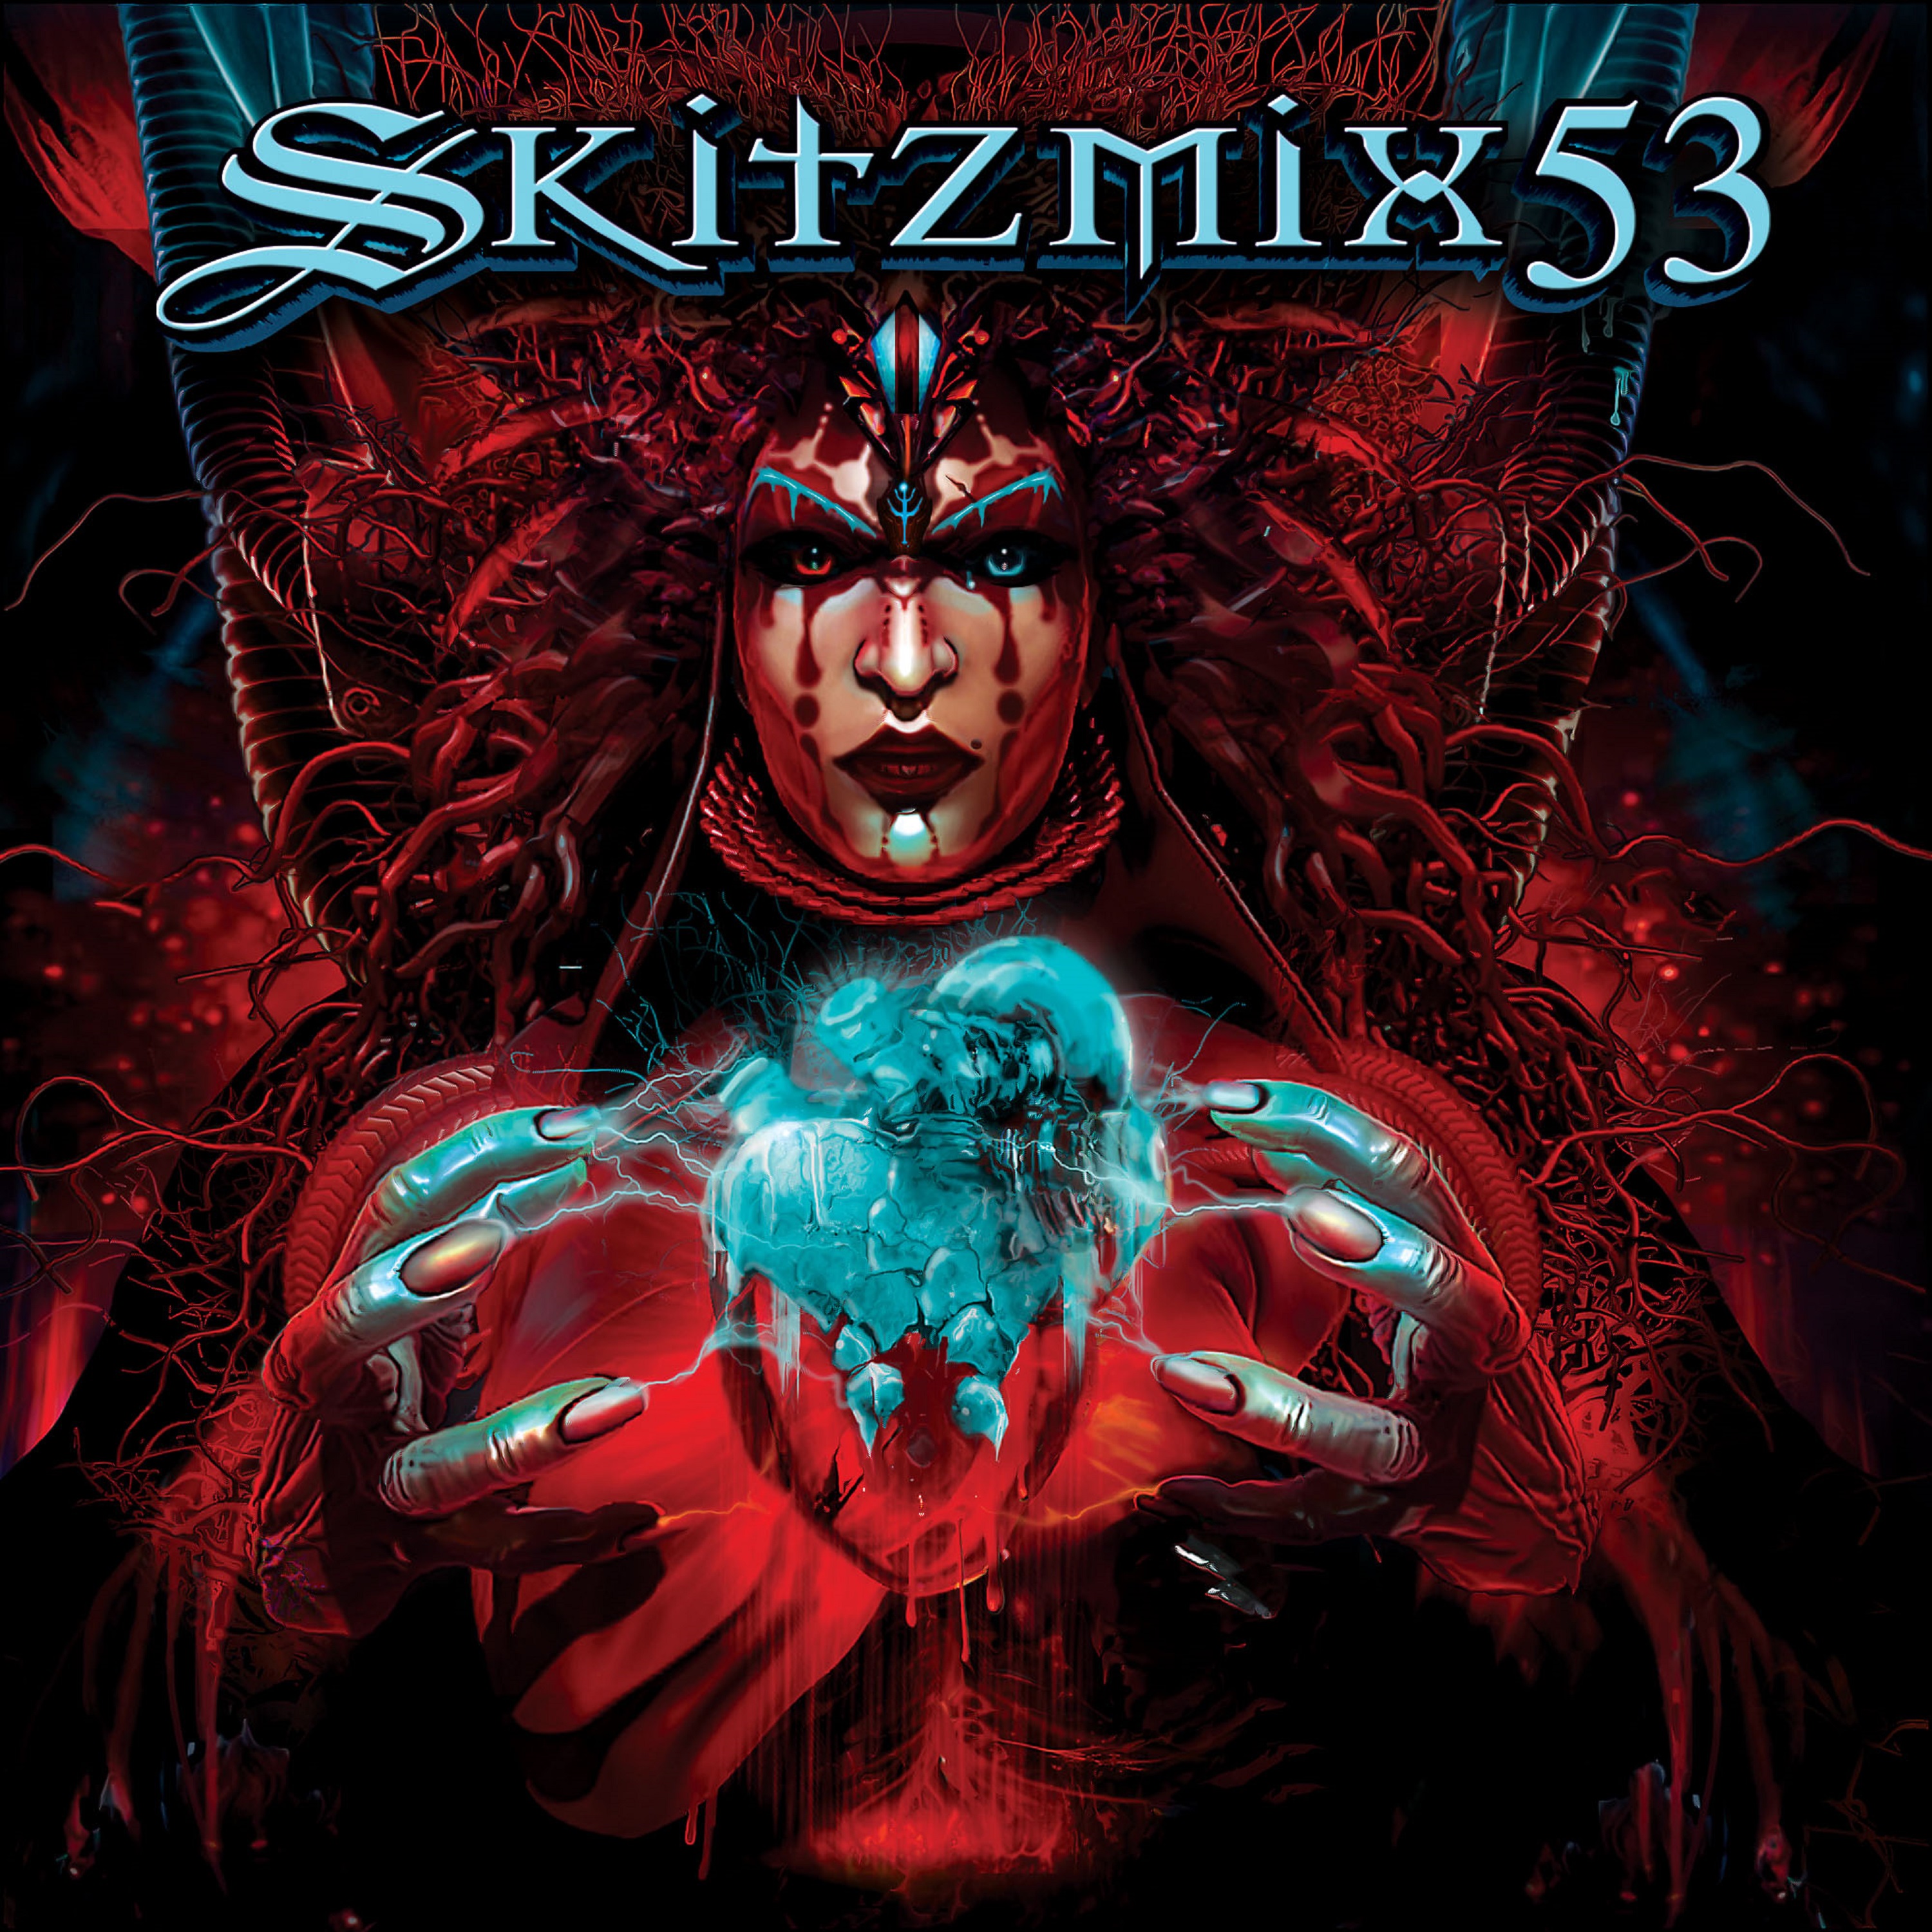 Skitzmix 53 (Continuous Mix 1)